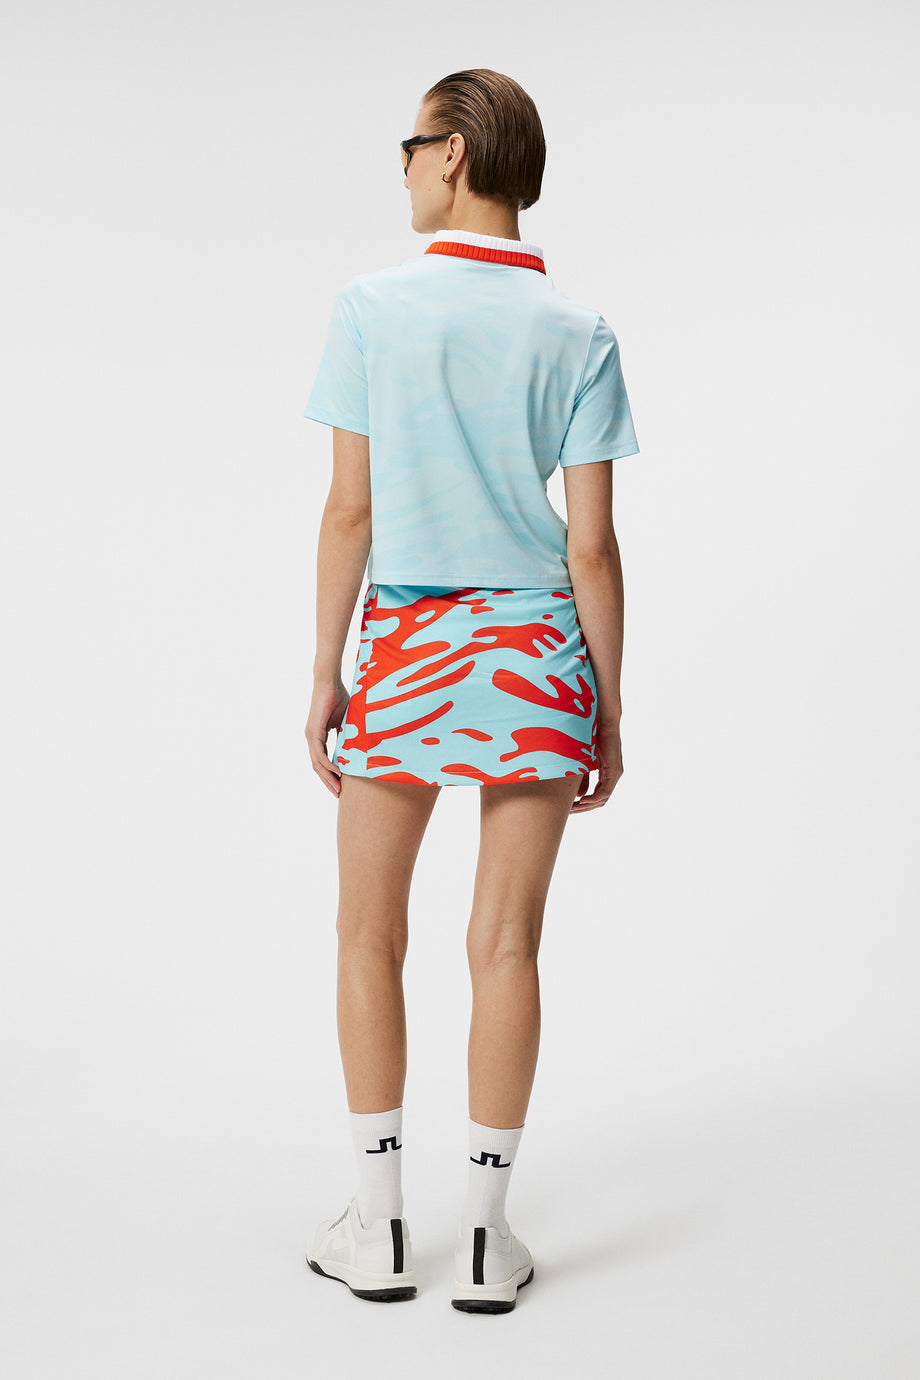 Amelie Print Skirt / Neptune Atomizer